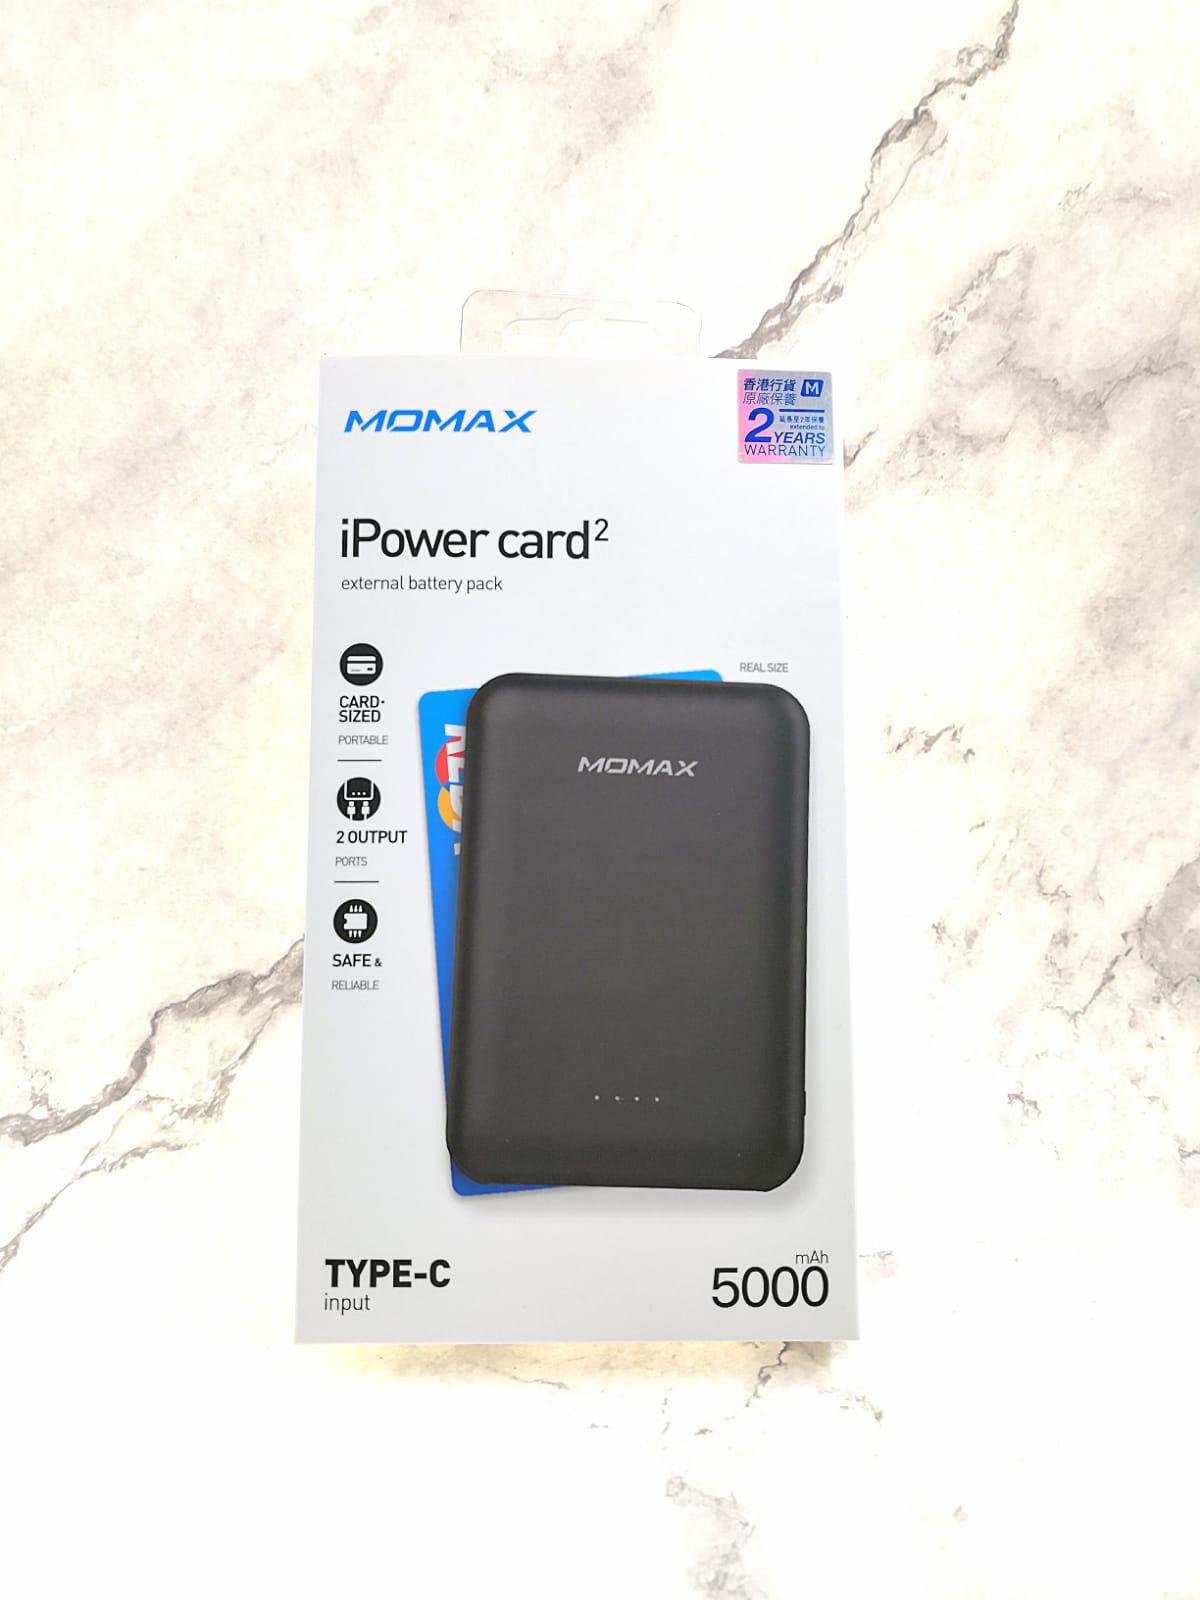 Momax iPower card2 - external battery pack